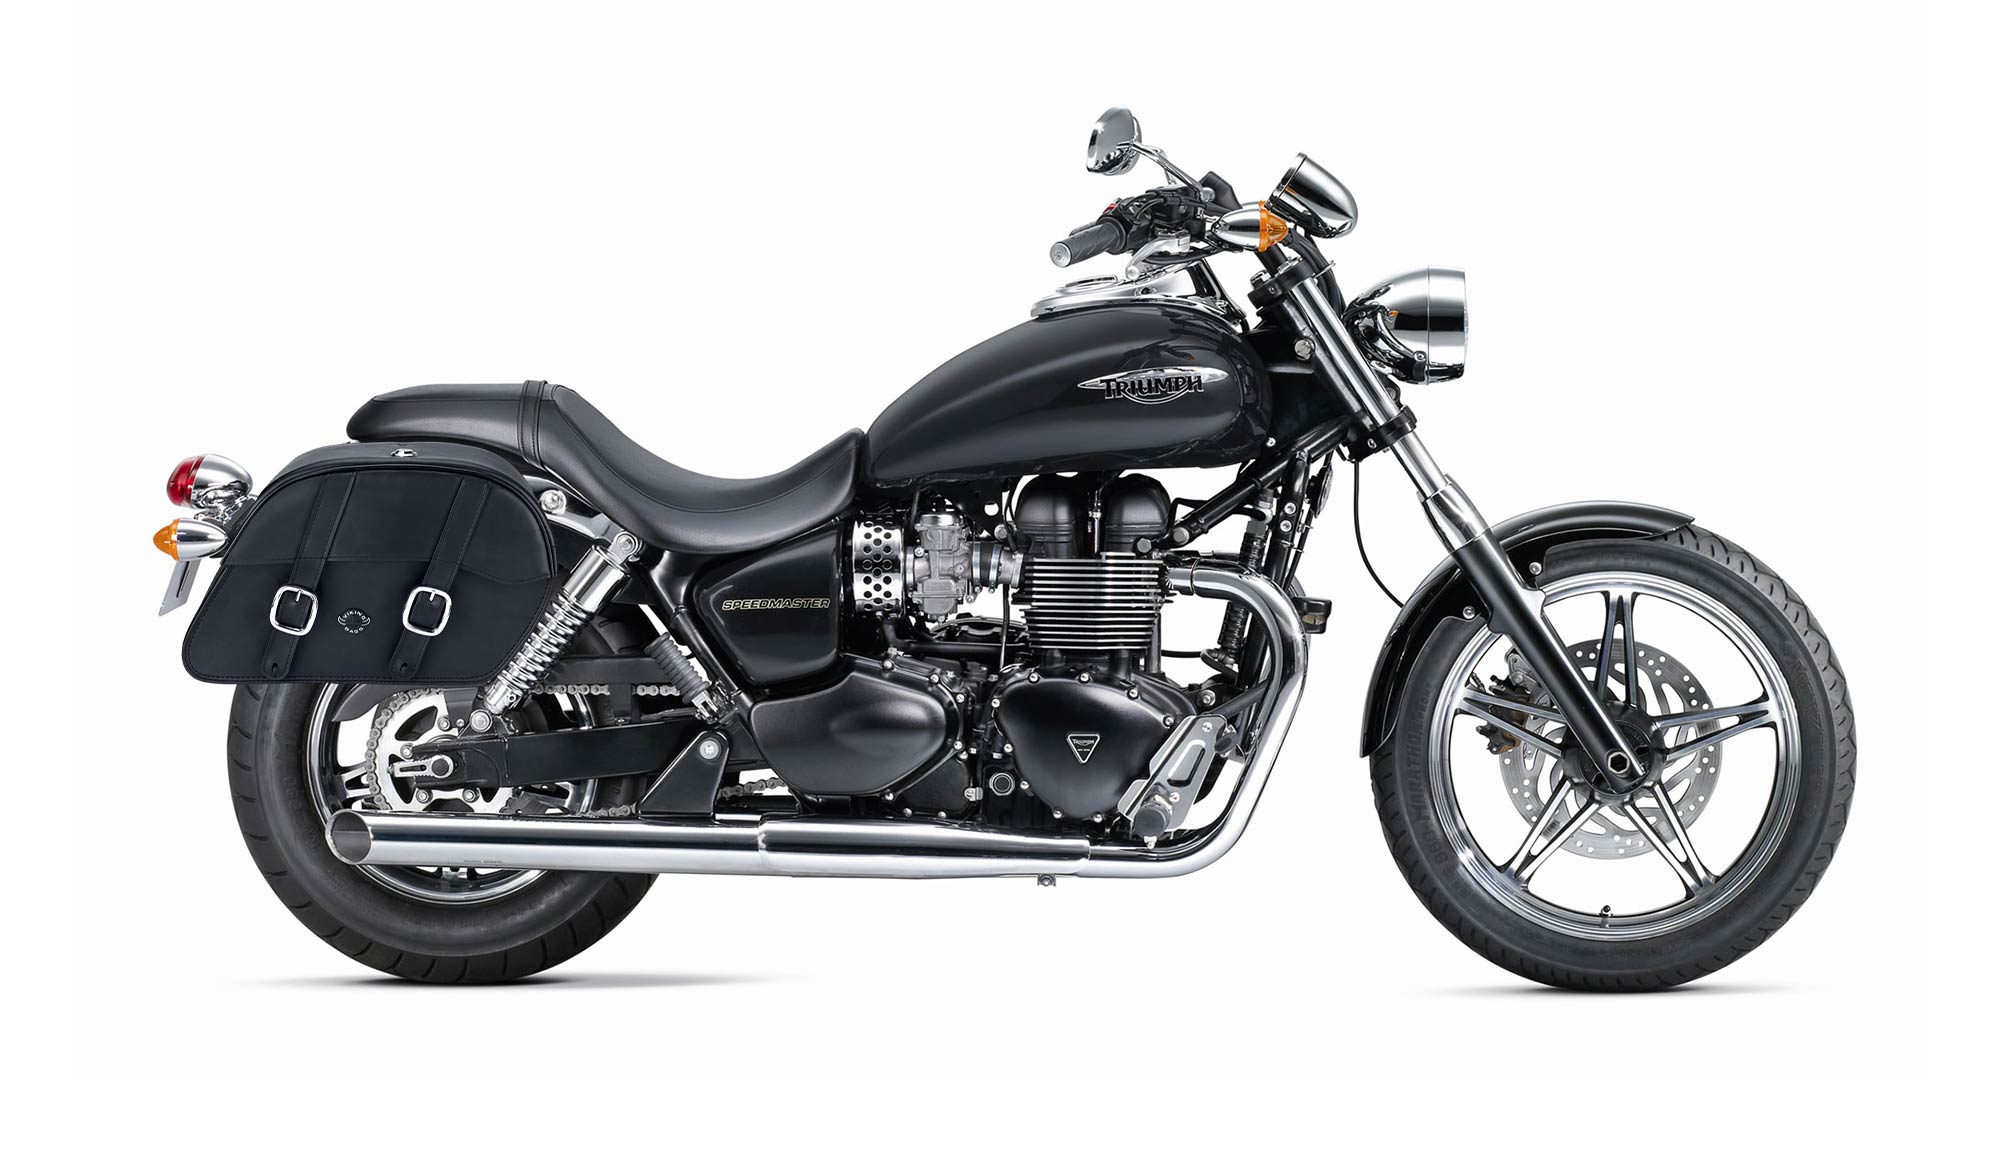 Viking Skarner Large Triumph Speedmaster Leather Motorcycle Saddlebags on Bike Photo @expand